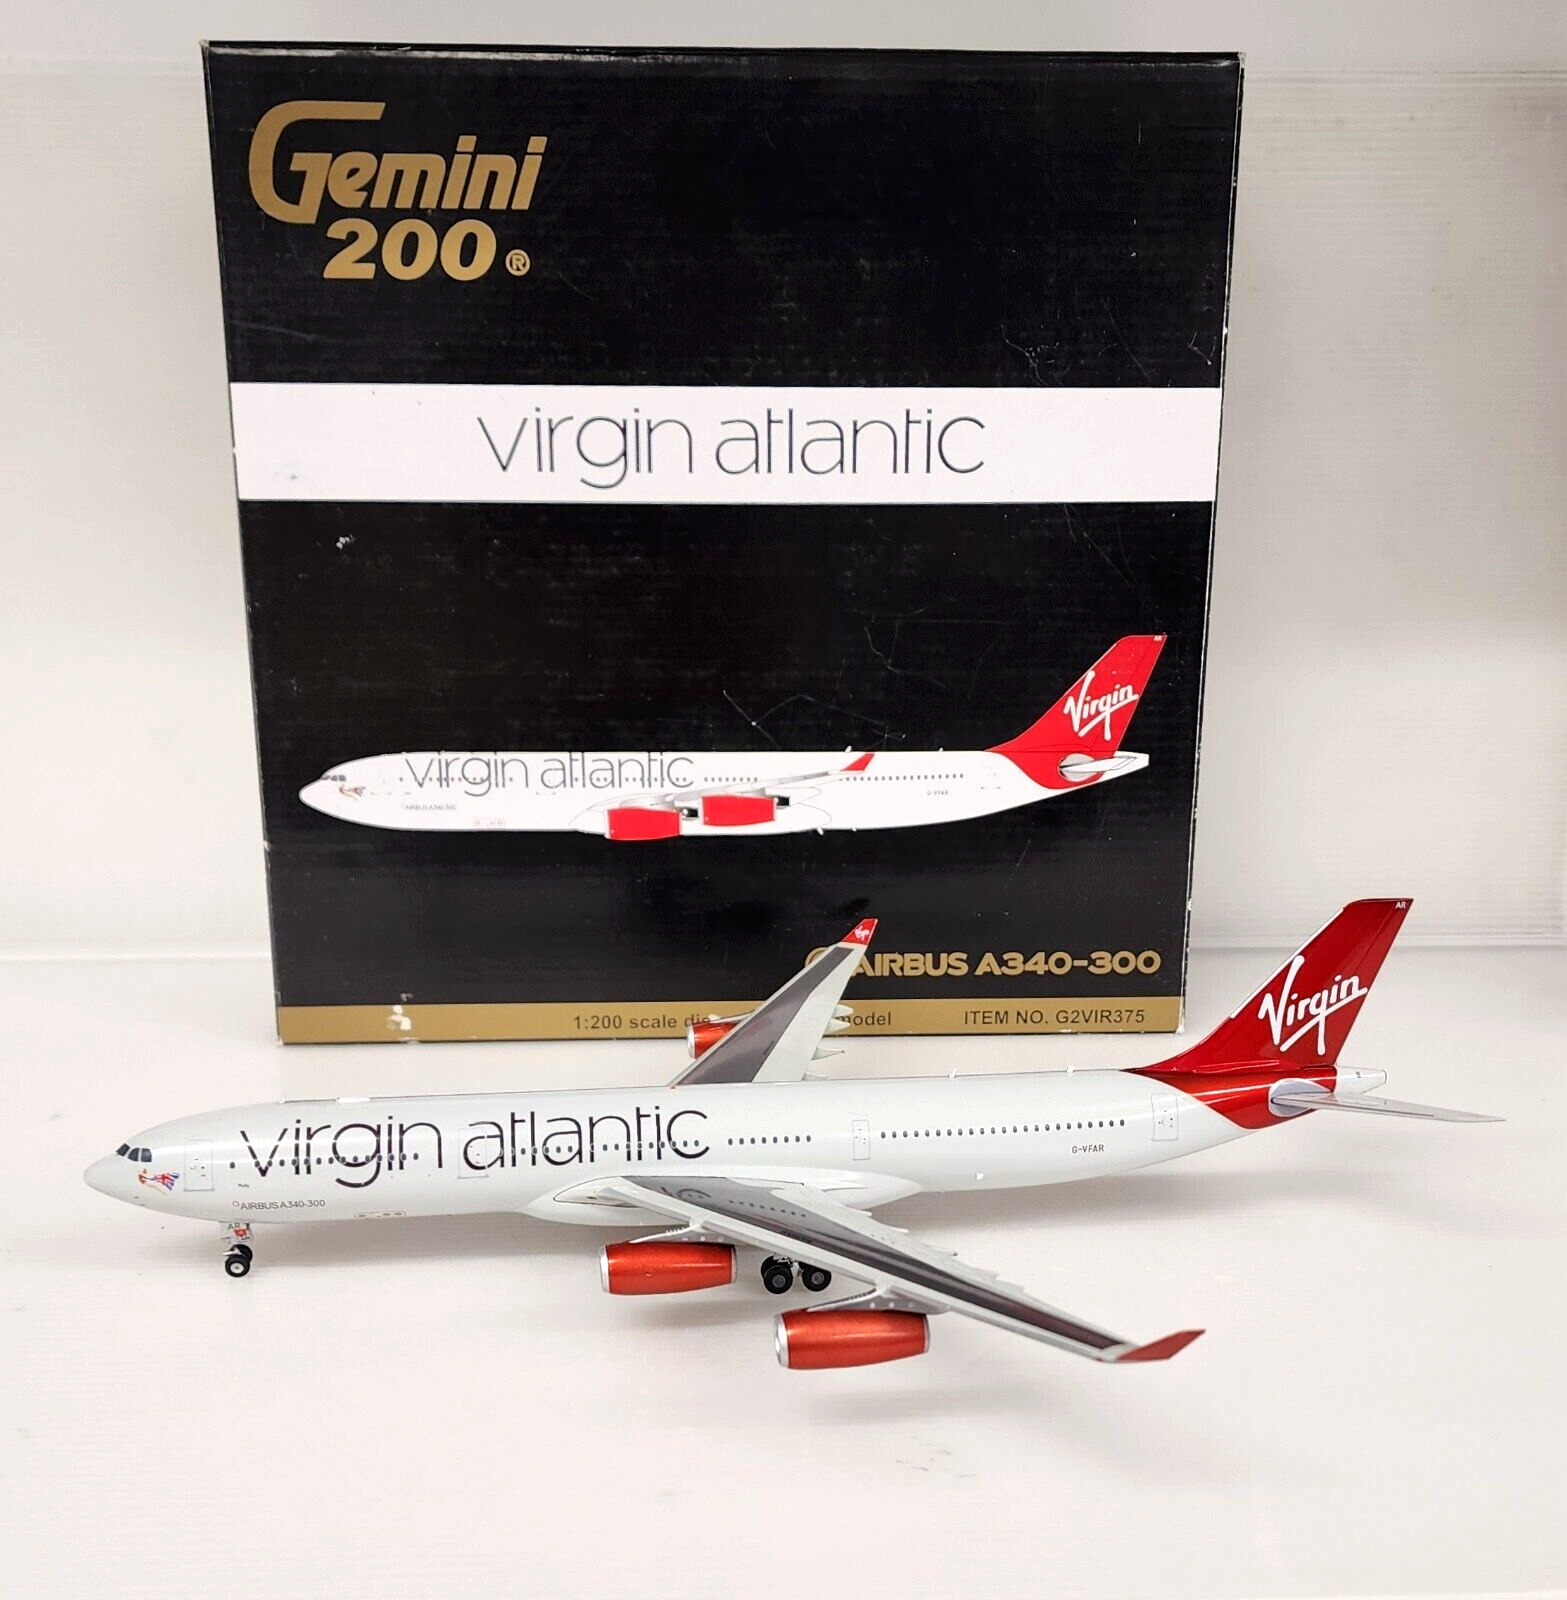 Gemini Jets 1:200 Airbus A340-300 Virgin Atlantic G-VFAR (with stand) G2VIR375